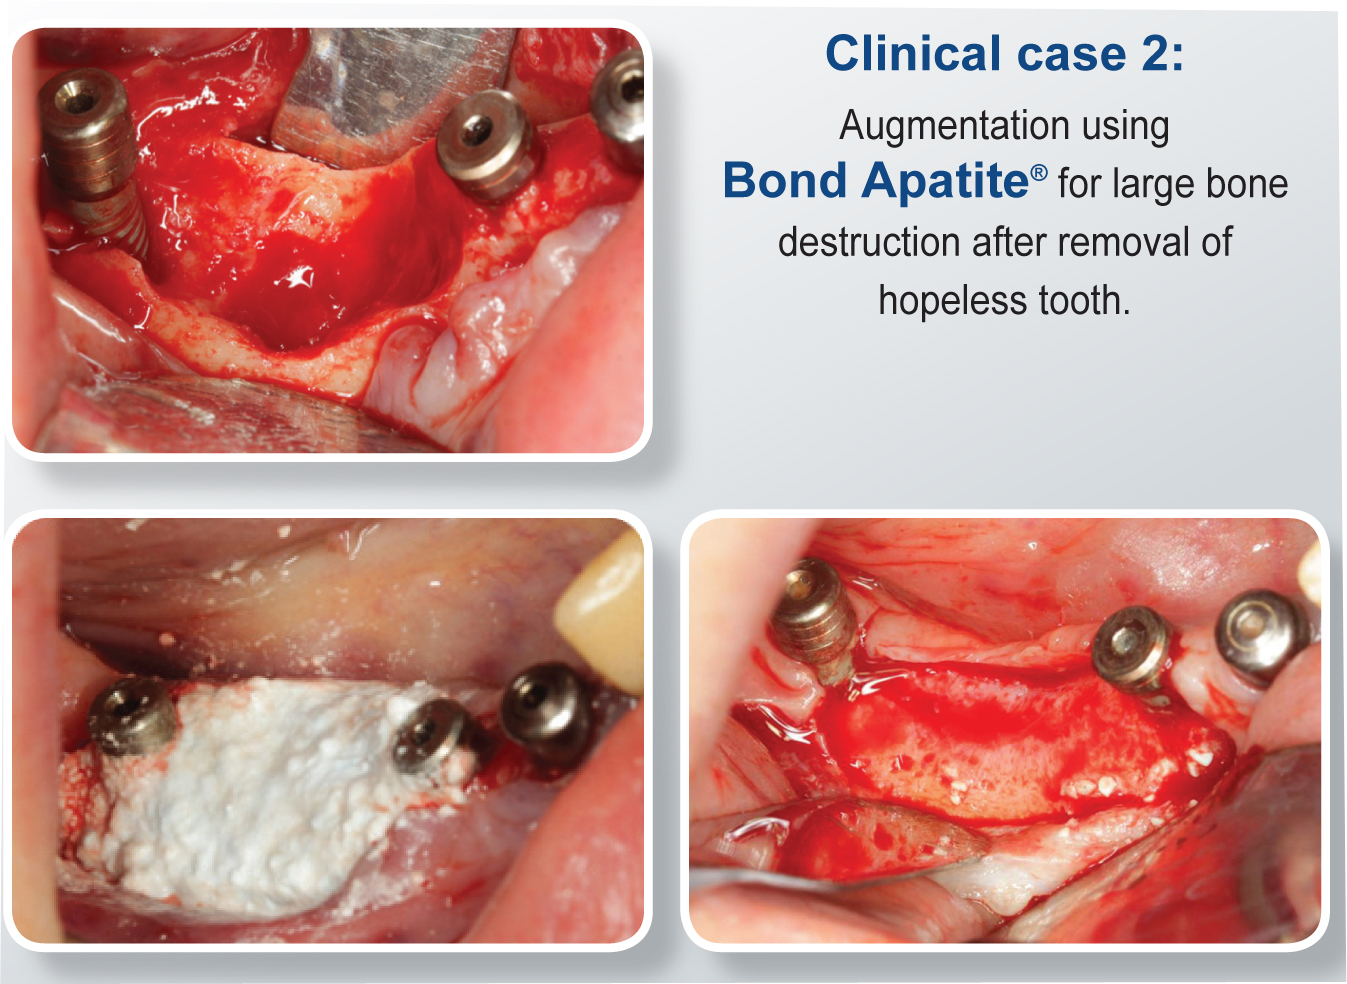 Bond Apatite Bone Graft Cement - Clinical Case